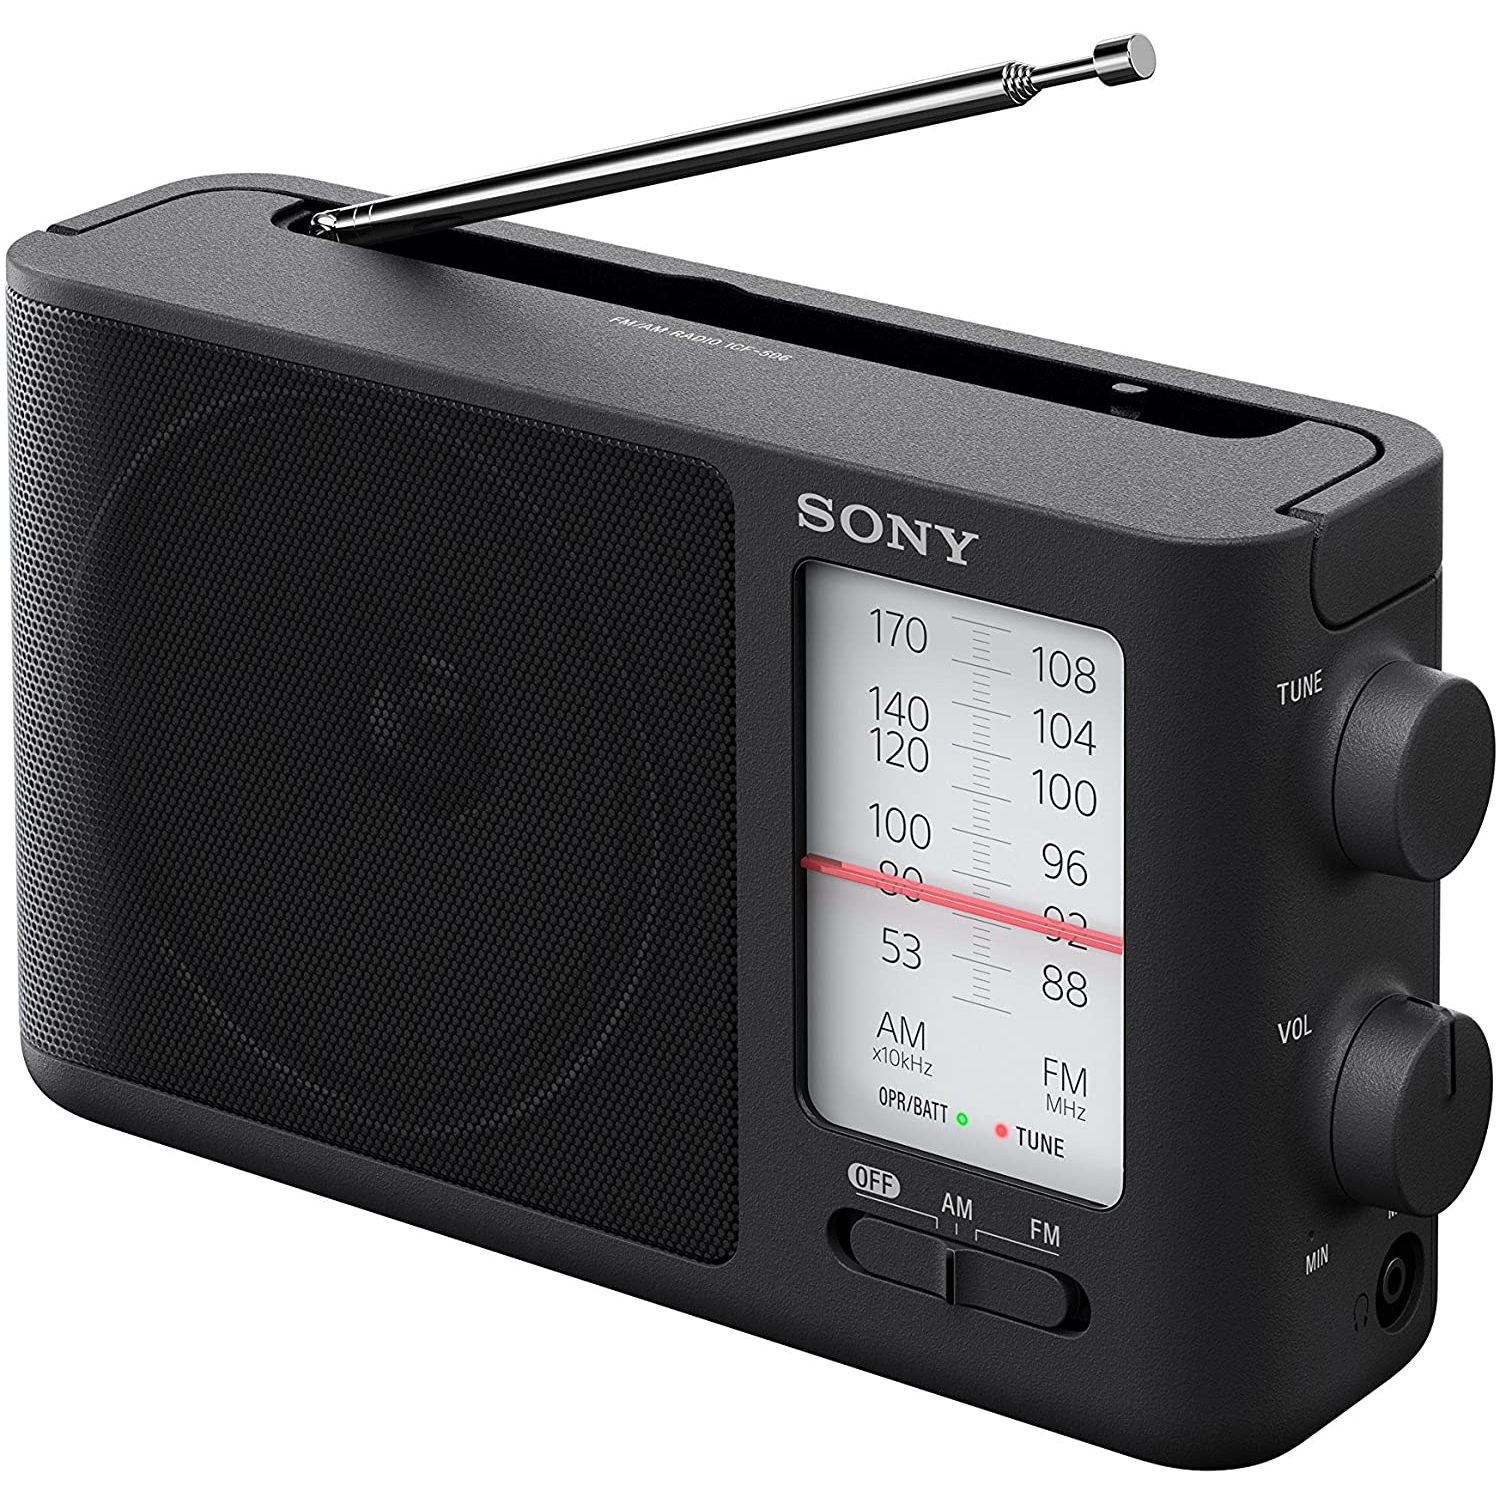 Sony ICF-506 Analog Tuning Portable FM/AM Radio, Black 2.14 lb - Open Box